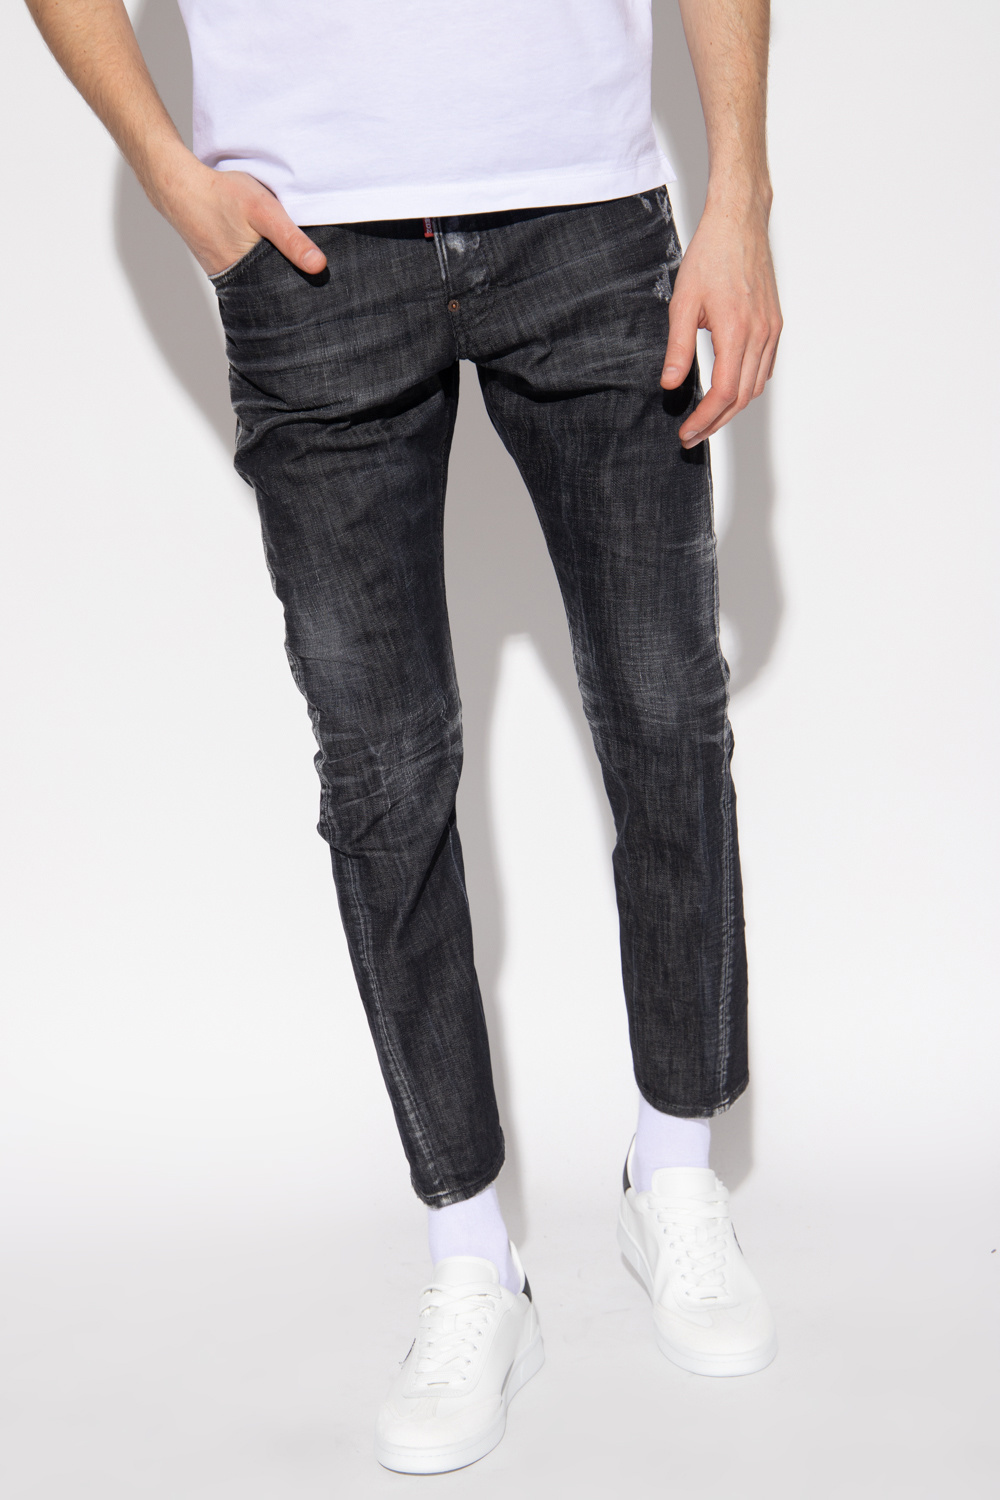 Dsquared2 'Sexy Twist' jeans | Men's Clothing | Vitkac